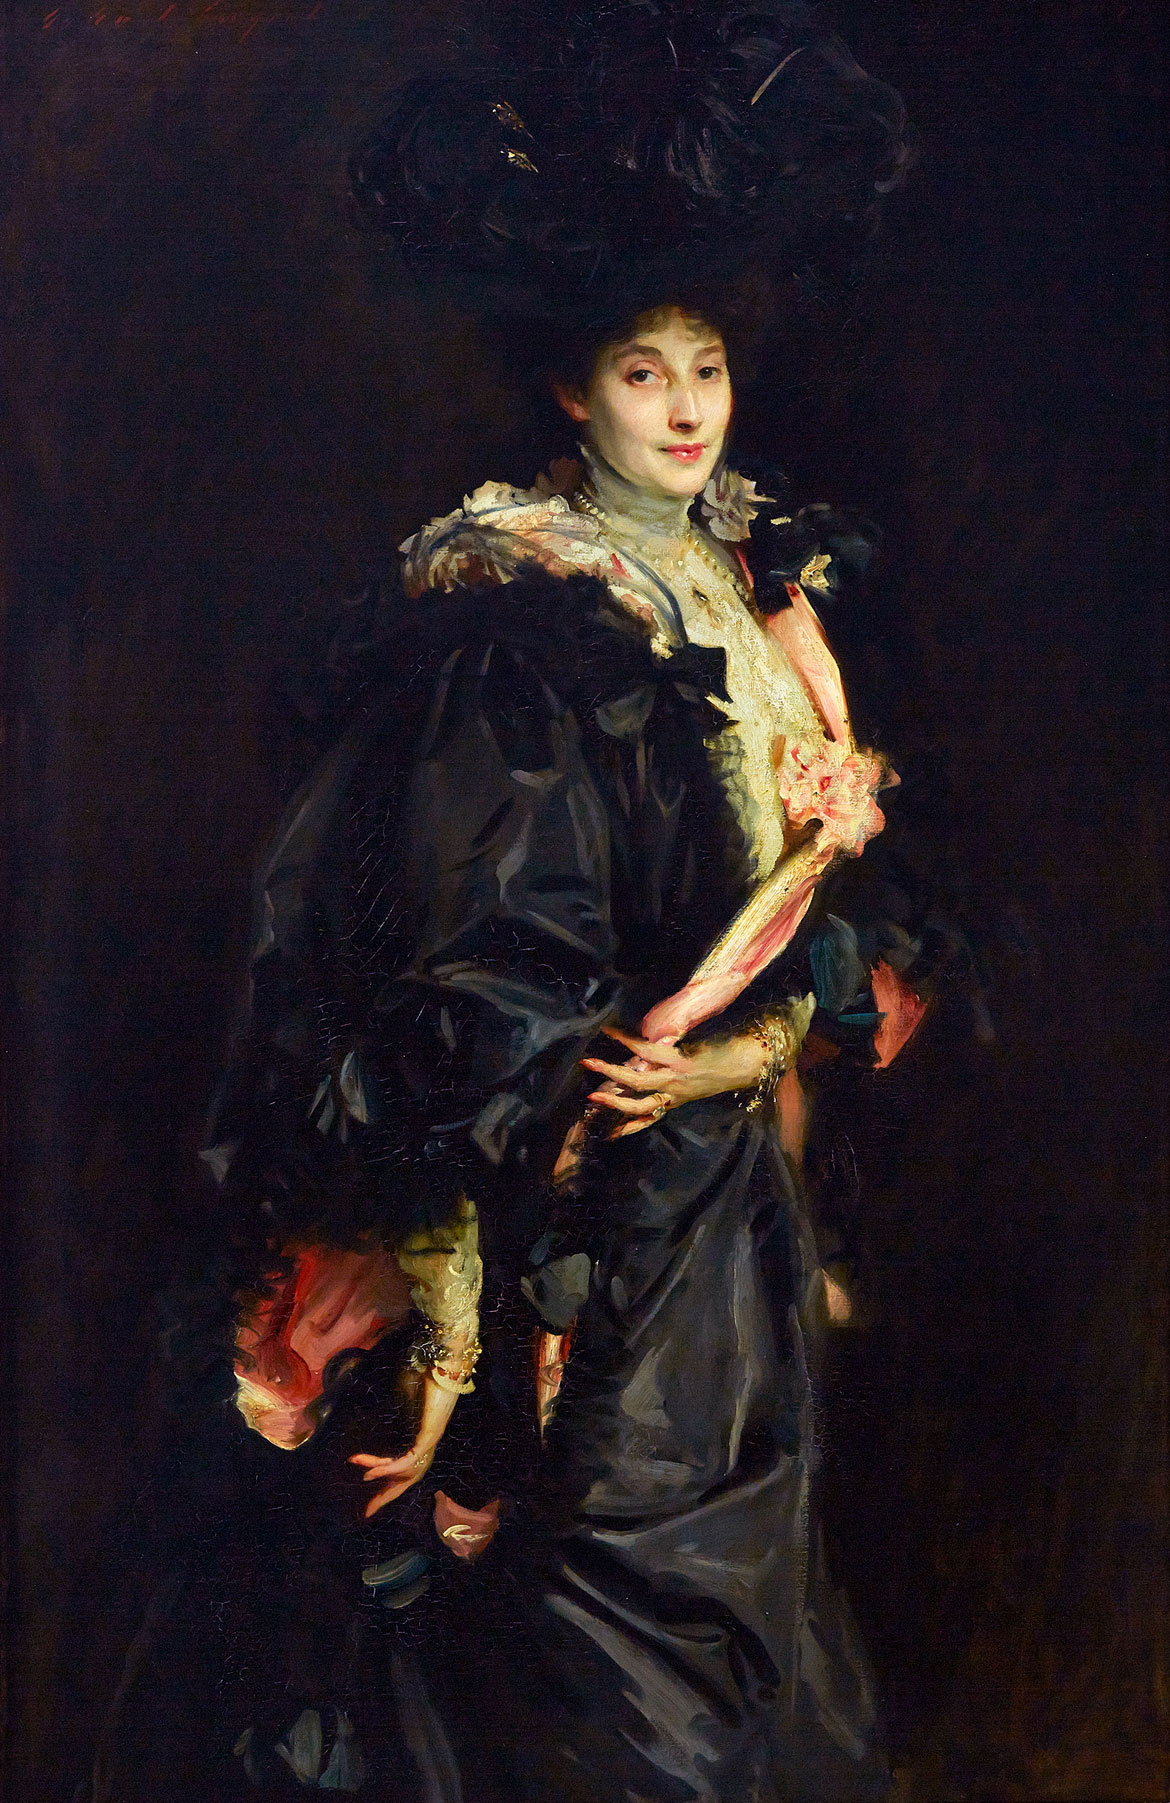 John Singer Sargent, "Lady Sassoon," 1907, oil on canvas.